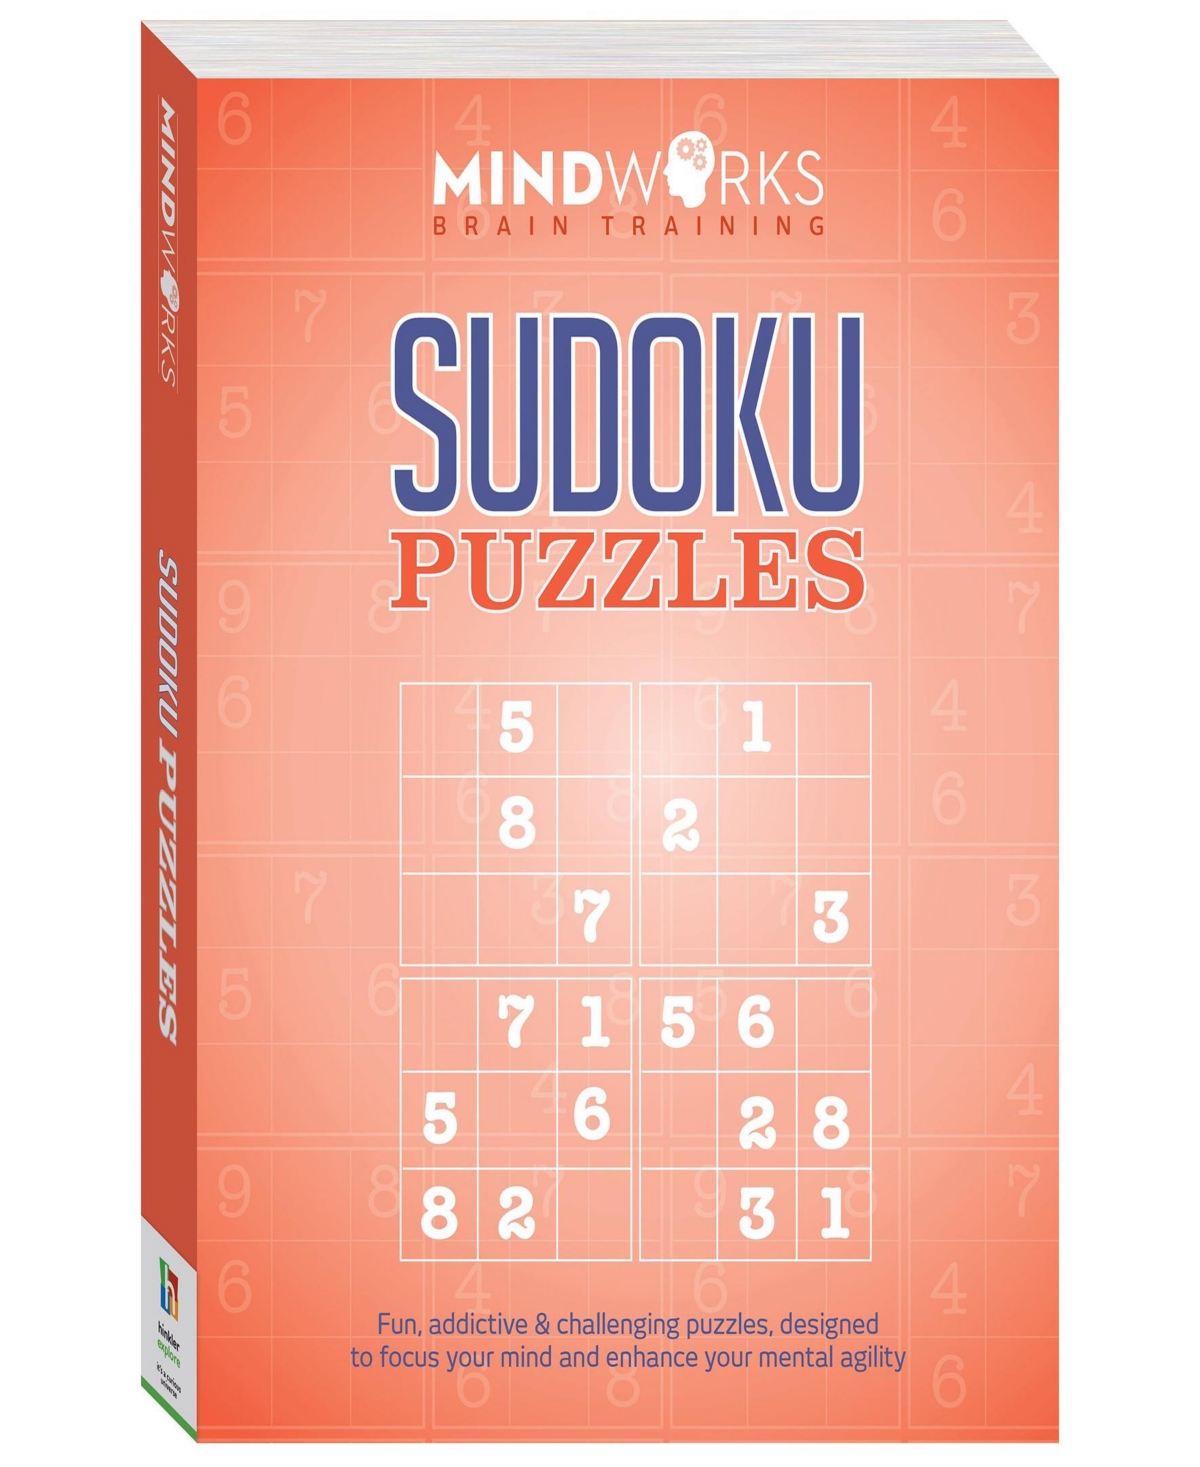 Mindworks - Sudoku Puzzles Puzzle Book In Multi